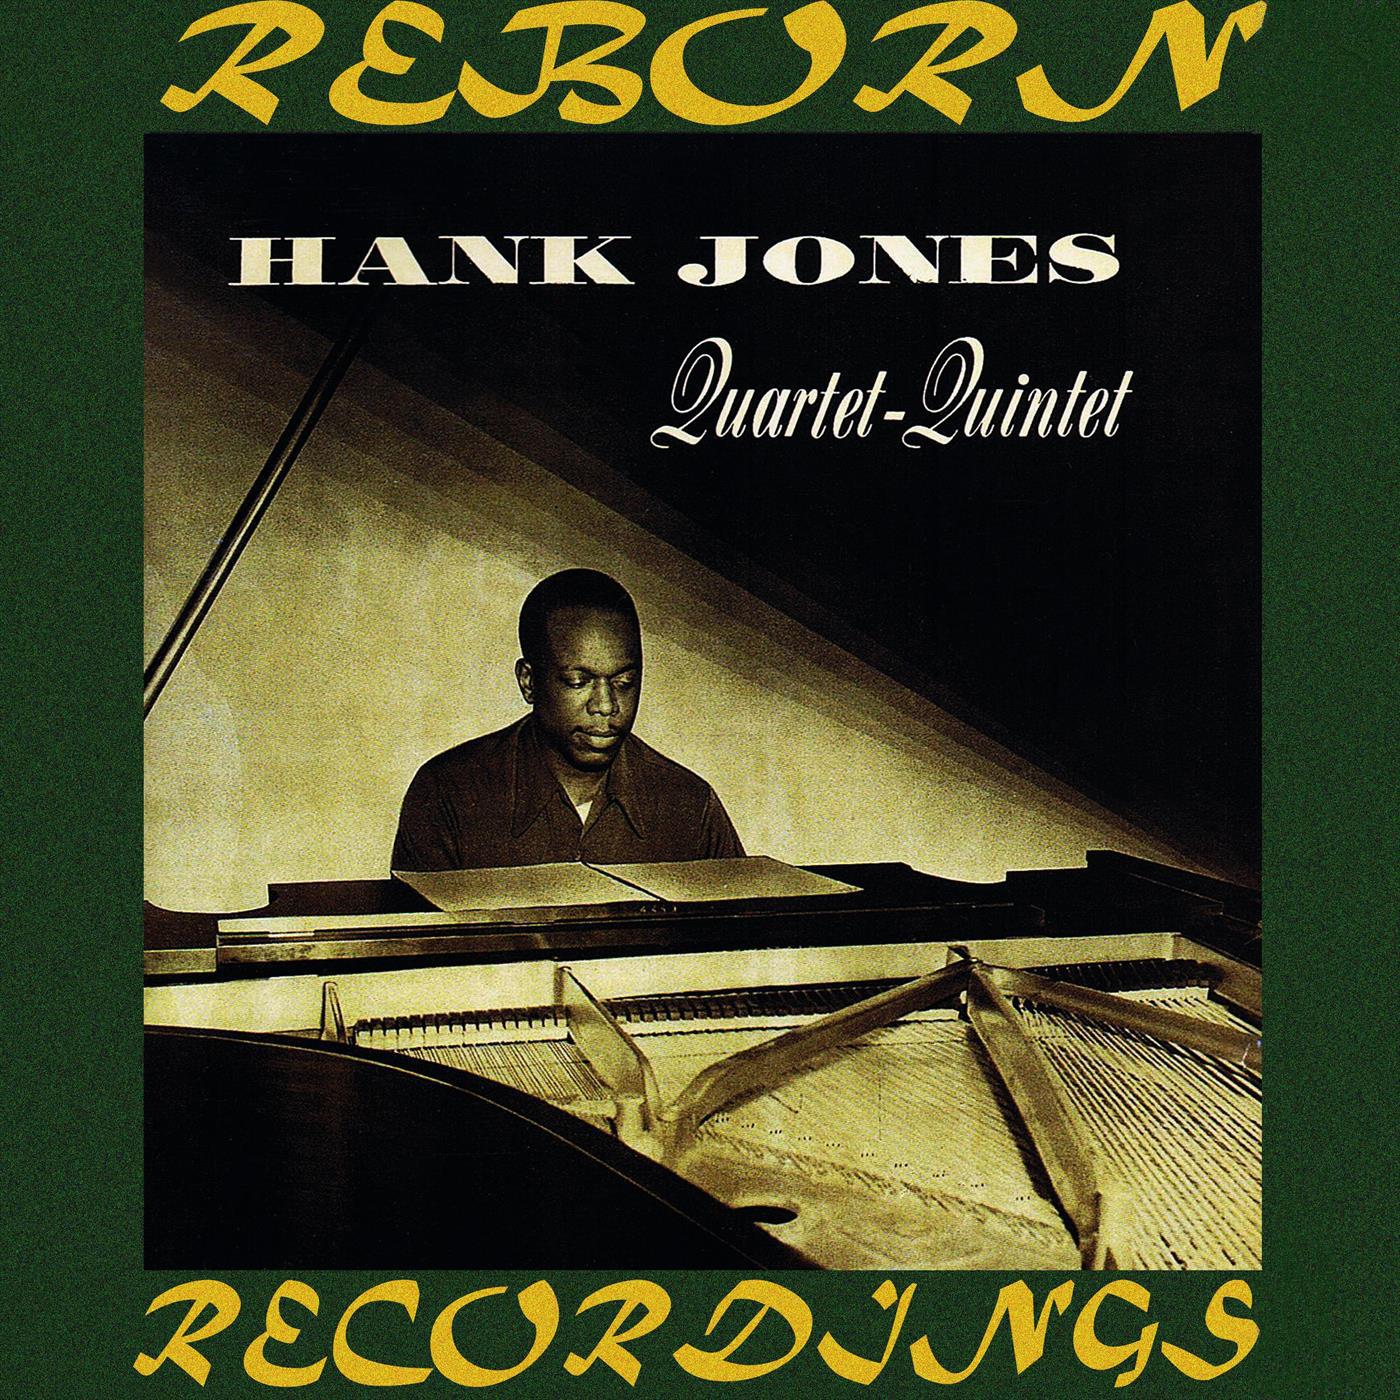 Hank Jones Quartet/Quintet (HD Remastered)